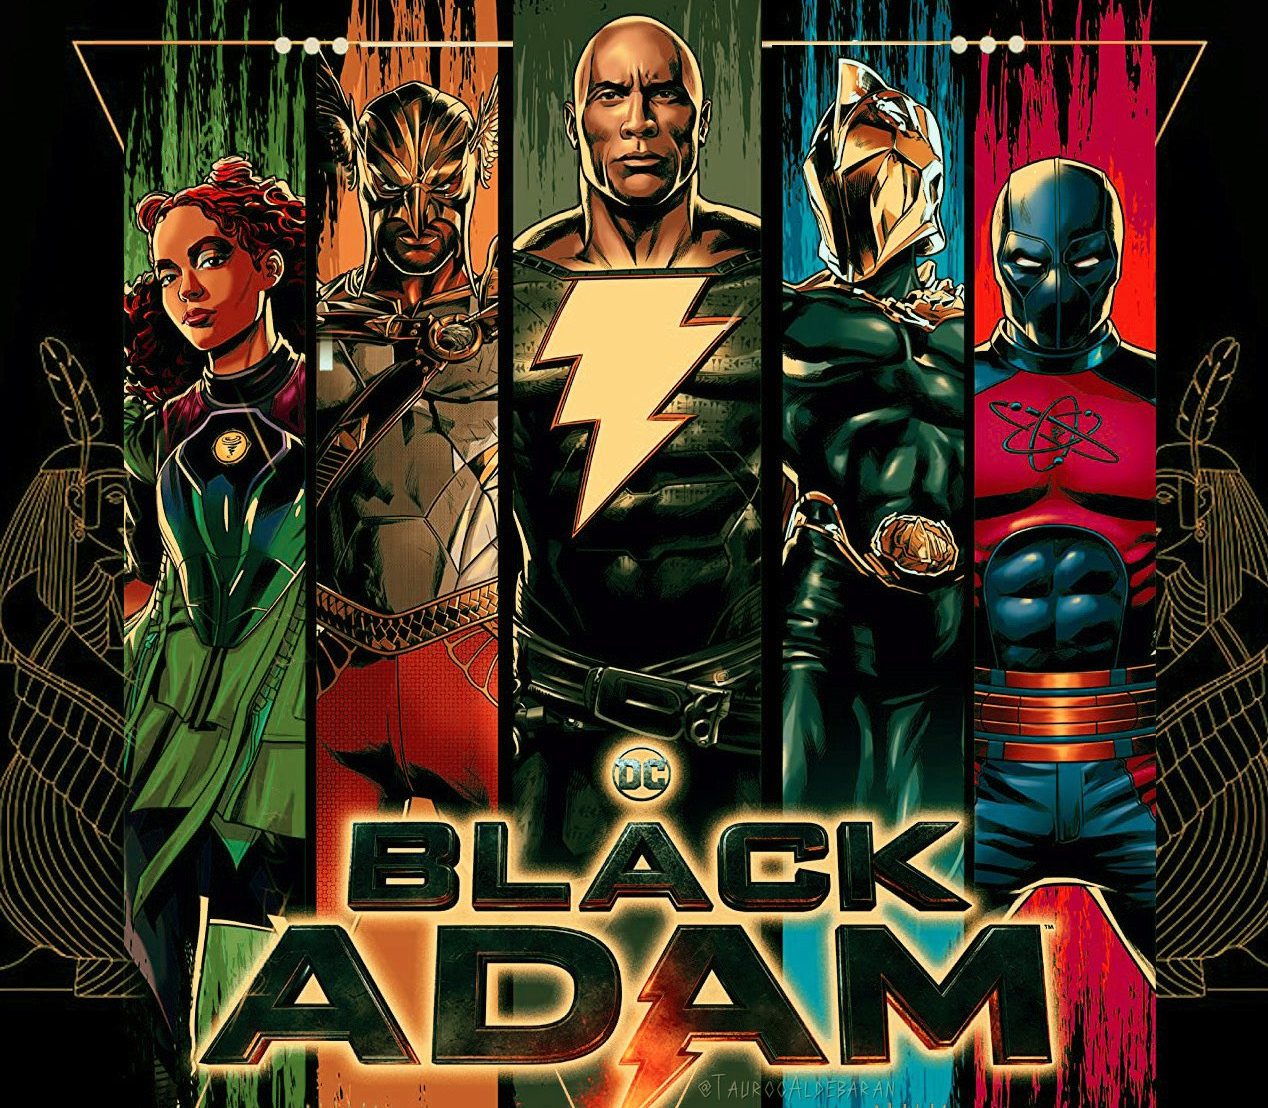 Black Adam New Posters Black Adam and the JSA!